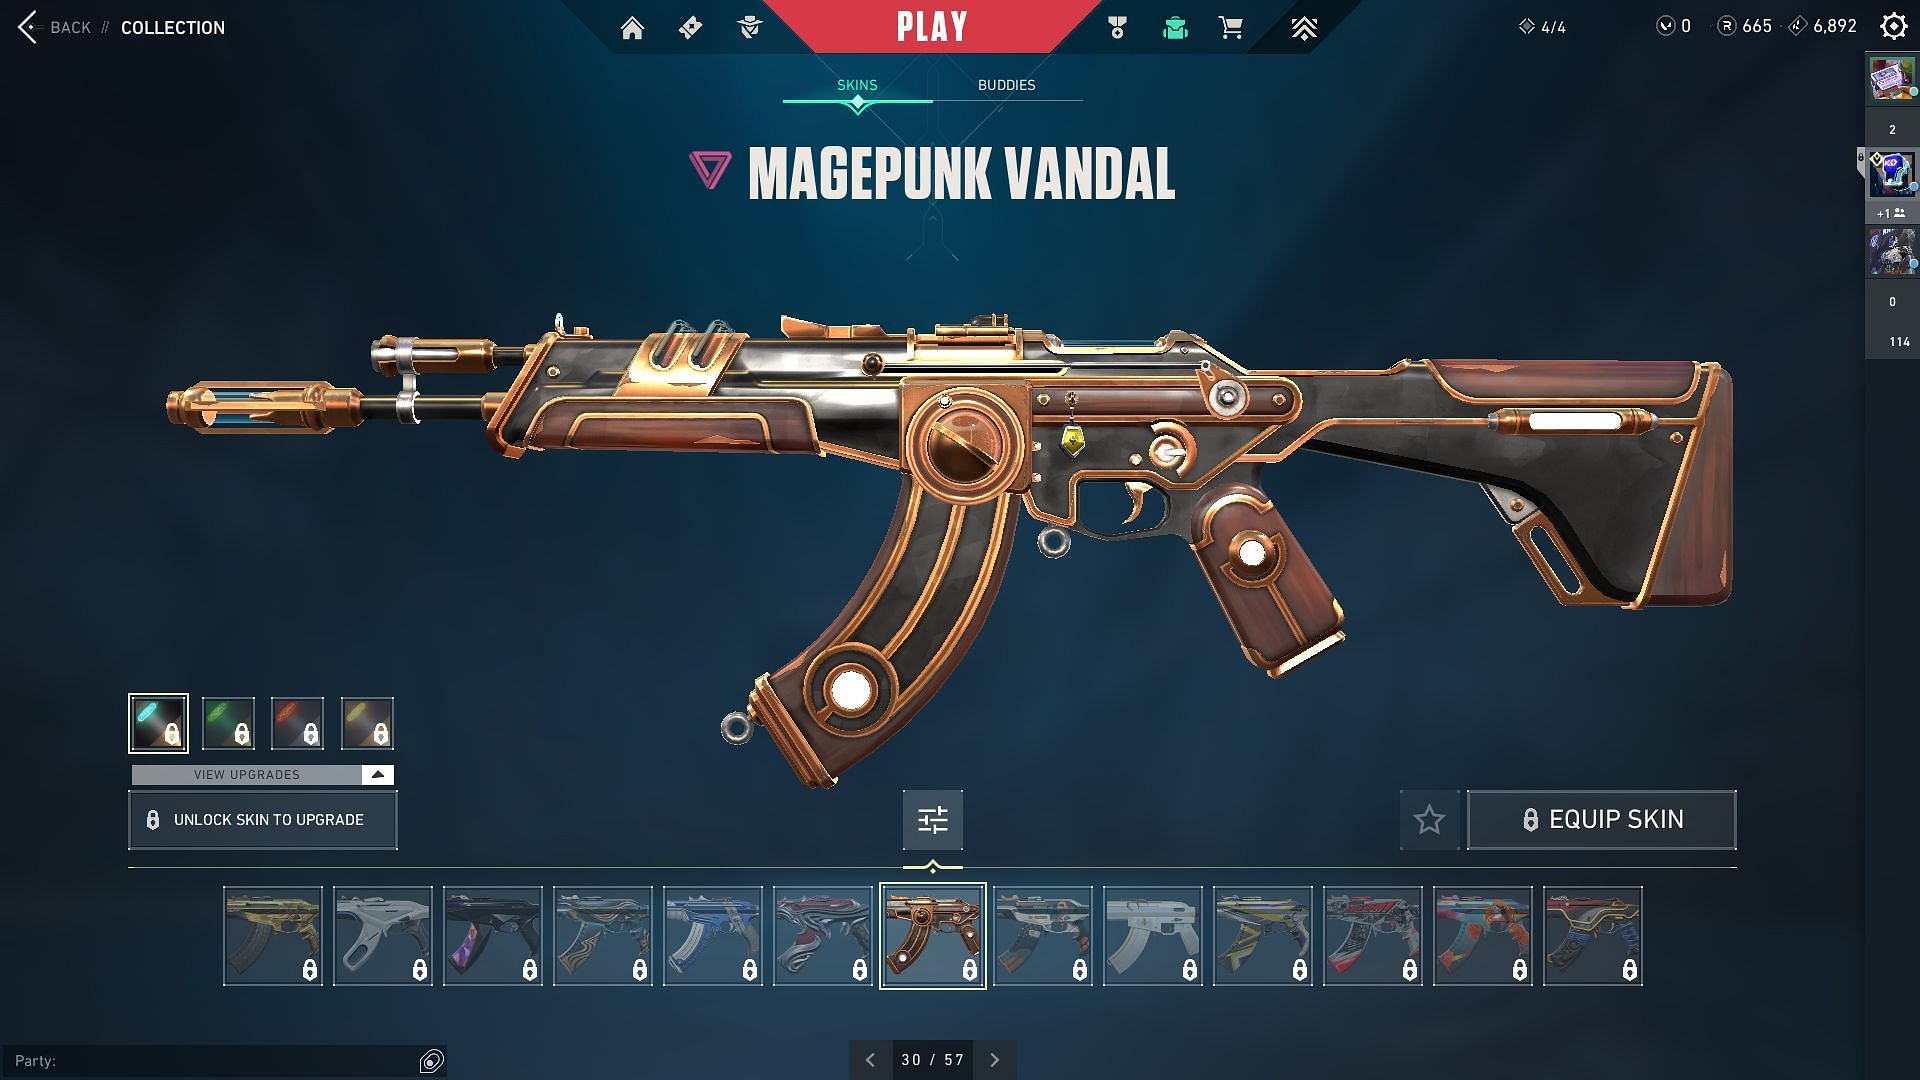 Magepunk Vamdal (Image via Riot Games)